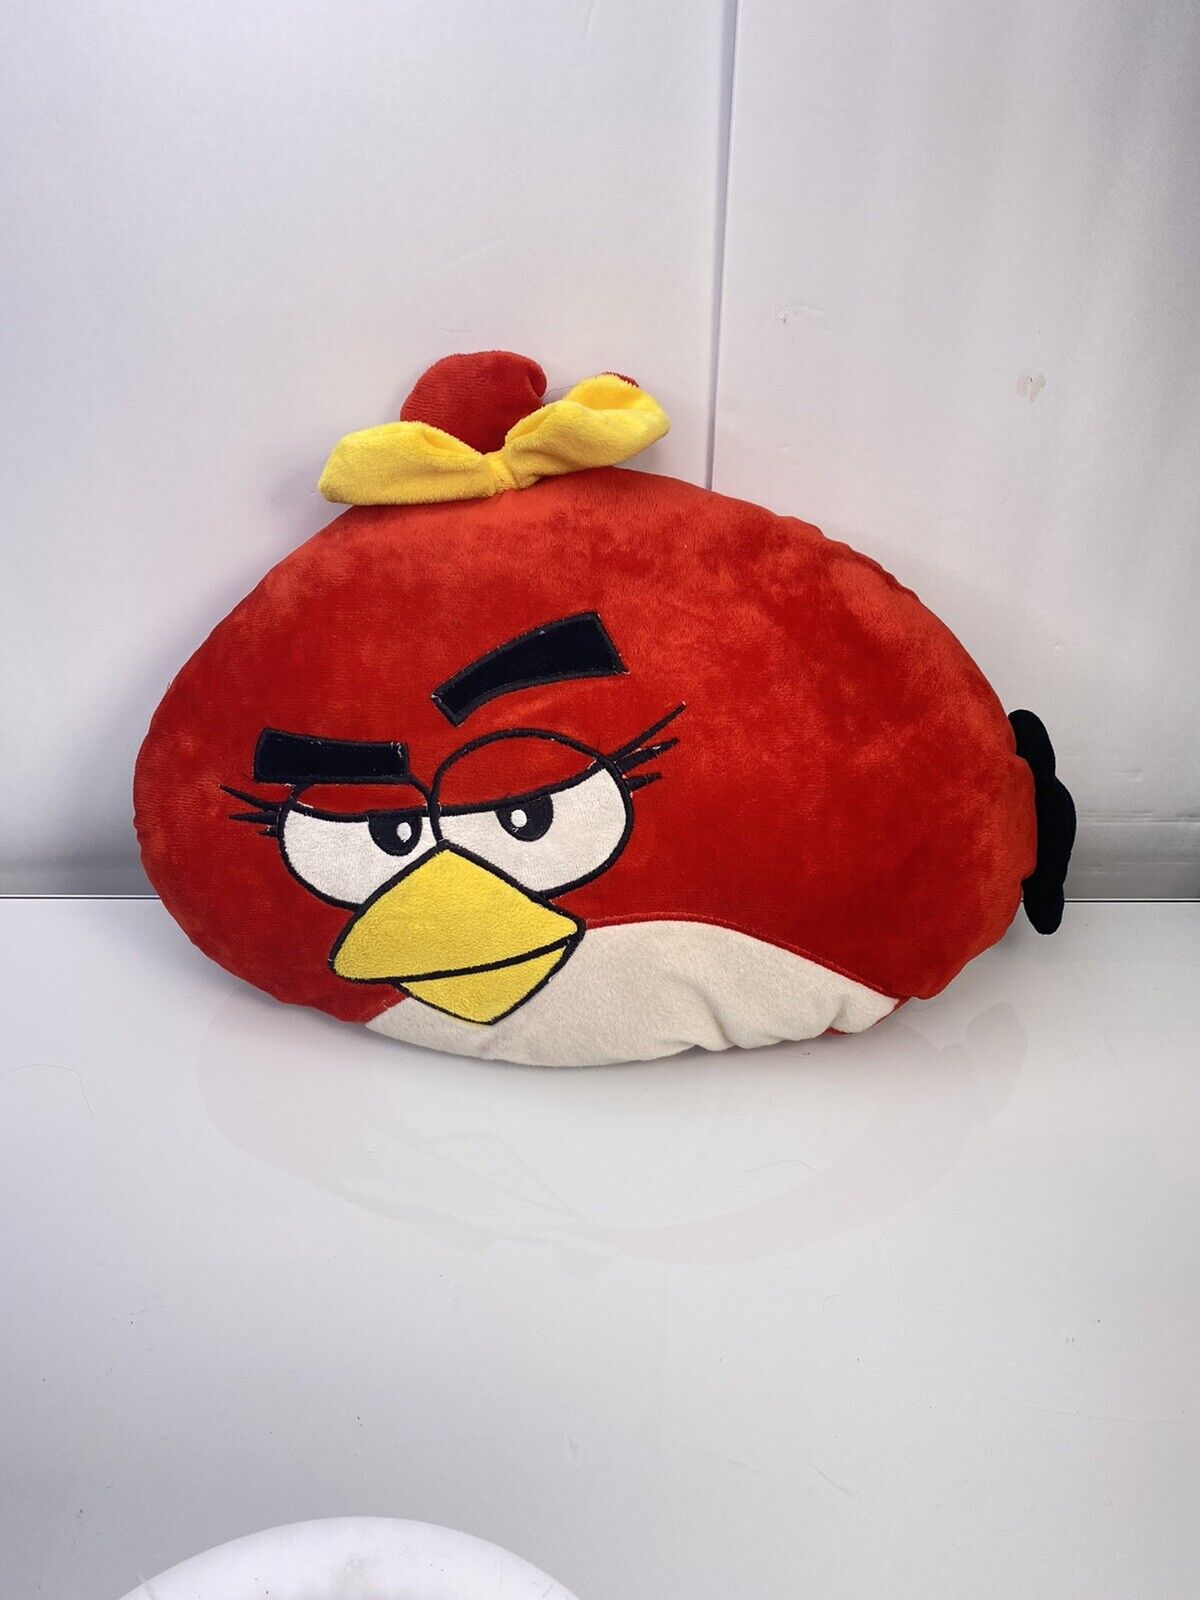 Angry Birds Red Bird Plush Stuffed Animal Pillow Large Character 16” | eBay